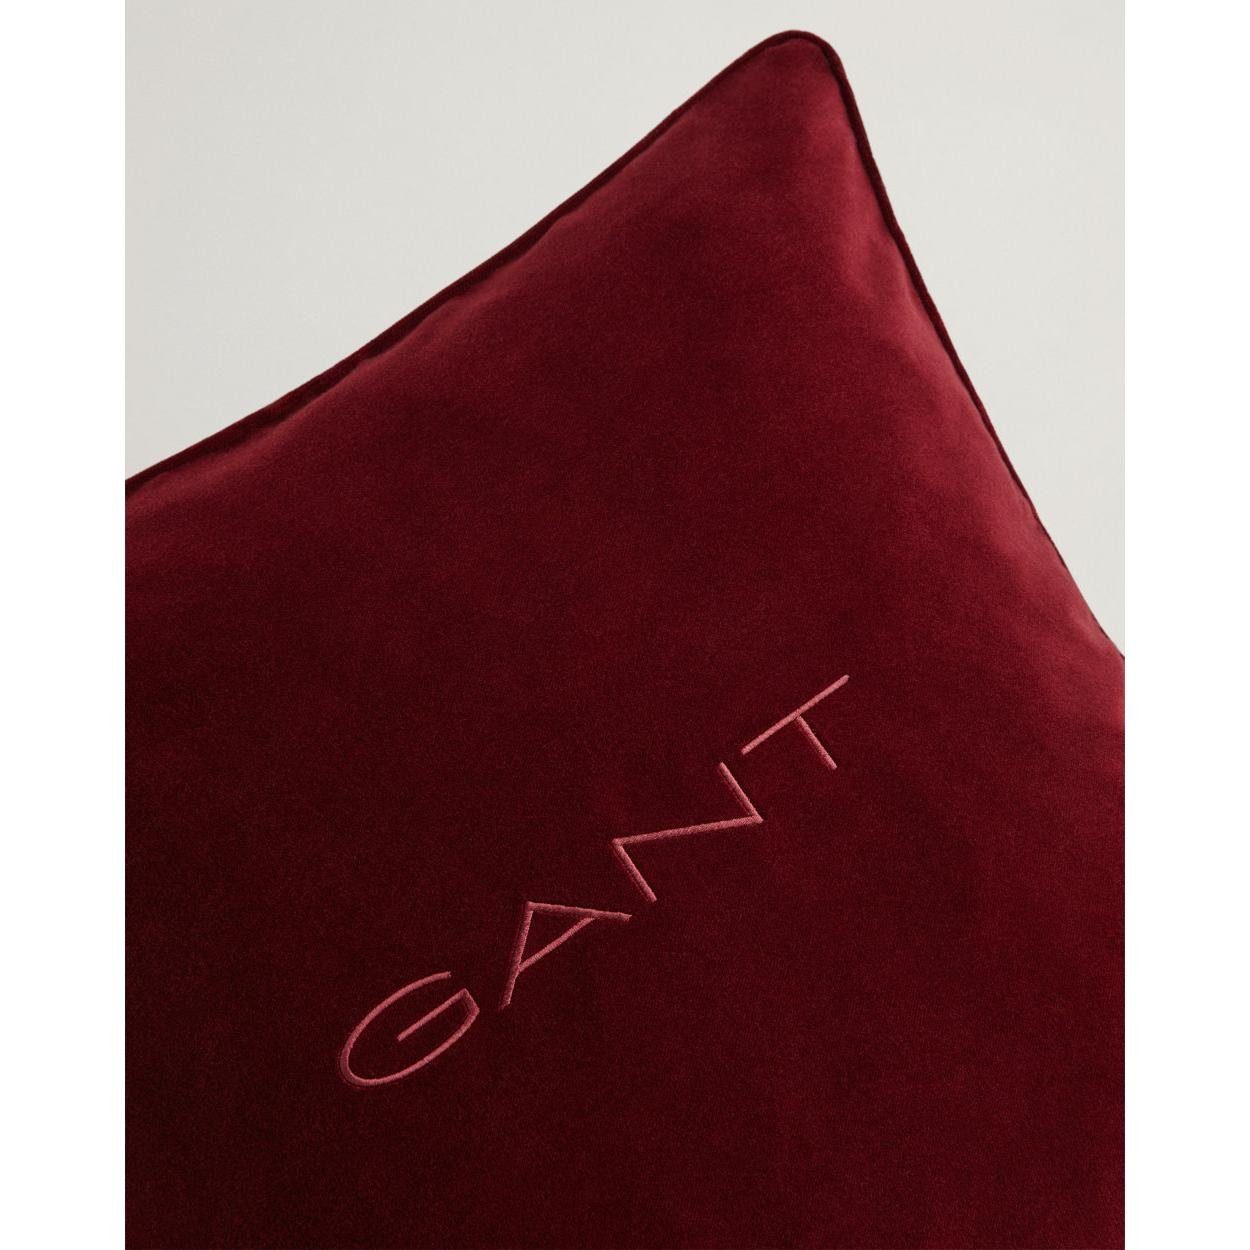 Red Kissenhülle Home Gant Velvet Samt Kissenhülle Cushion (50x50cm), Gant Plumped